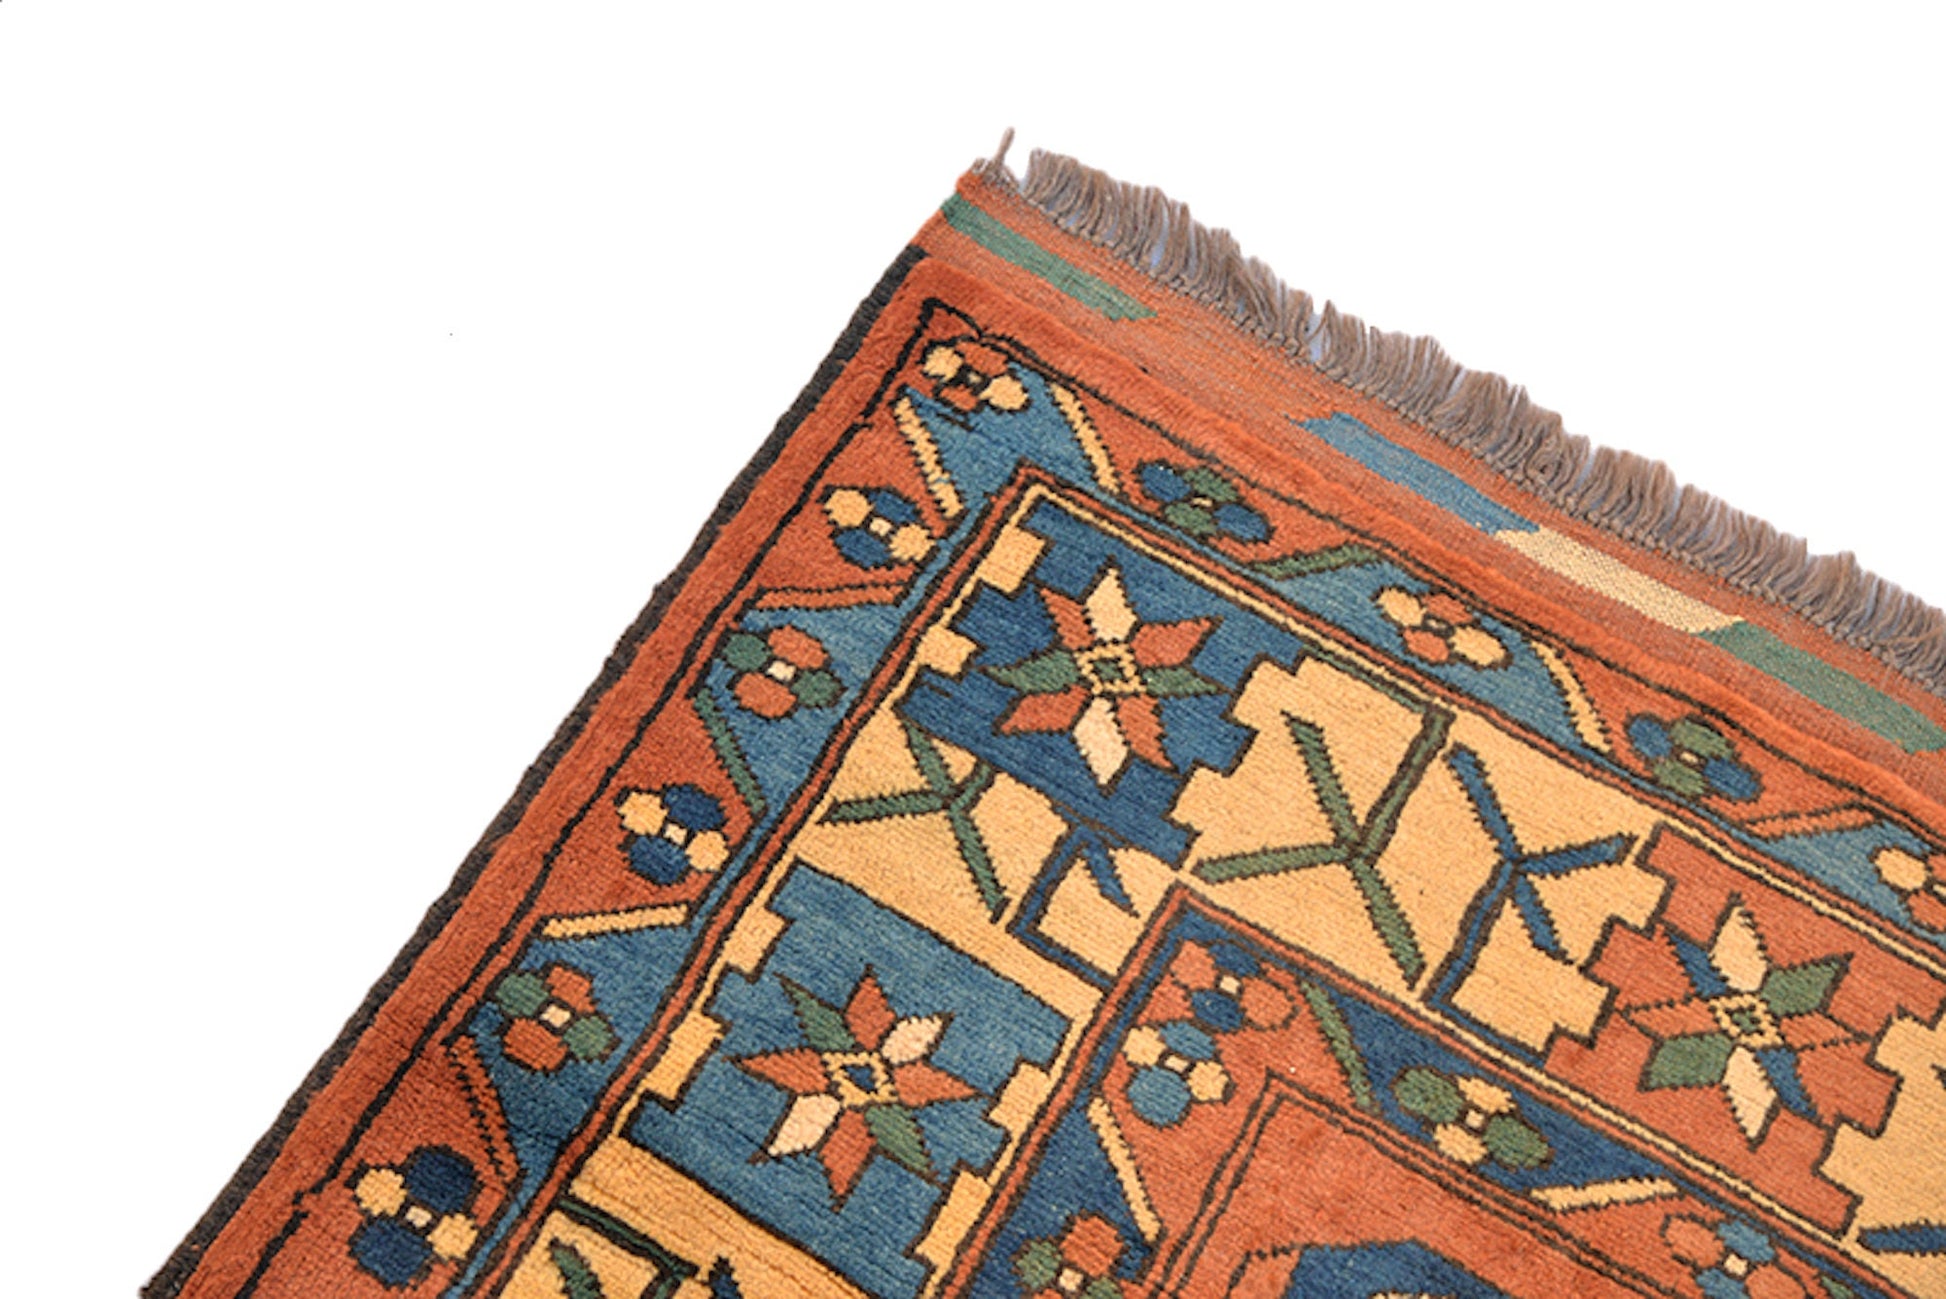 5 x 6 Feet Orange Blue Turkish Caucasian Rug | Hand Woven Area Rug | Oriental Persian Rug | Living Room Rug | Accent Geometric Pattern Rug